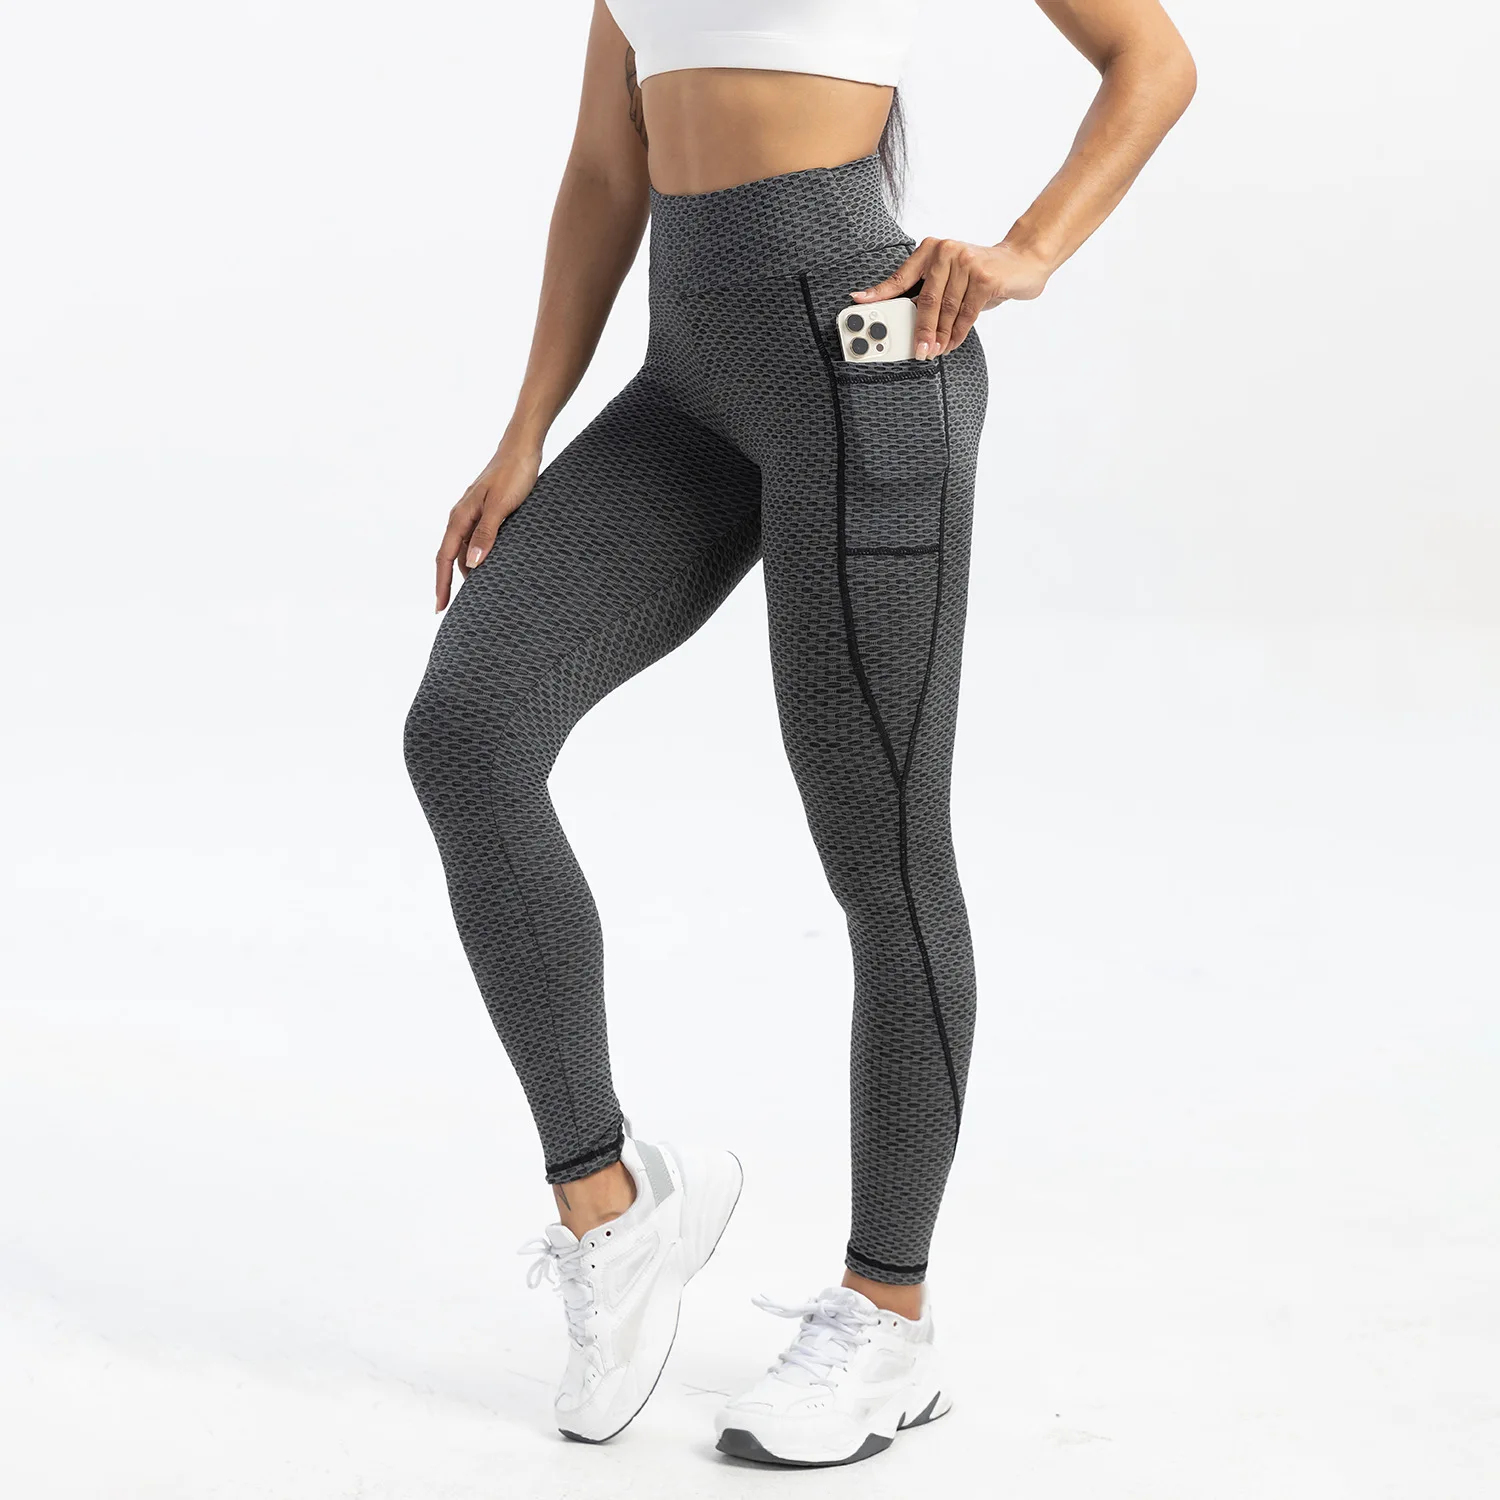 

CUTIES High Waist Gym Leggings Woman Pocket Scrunch Butt Yoga Pant Honeycomb Fitness Clothes Workout Tights Leggins Sportswear